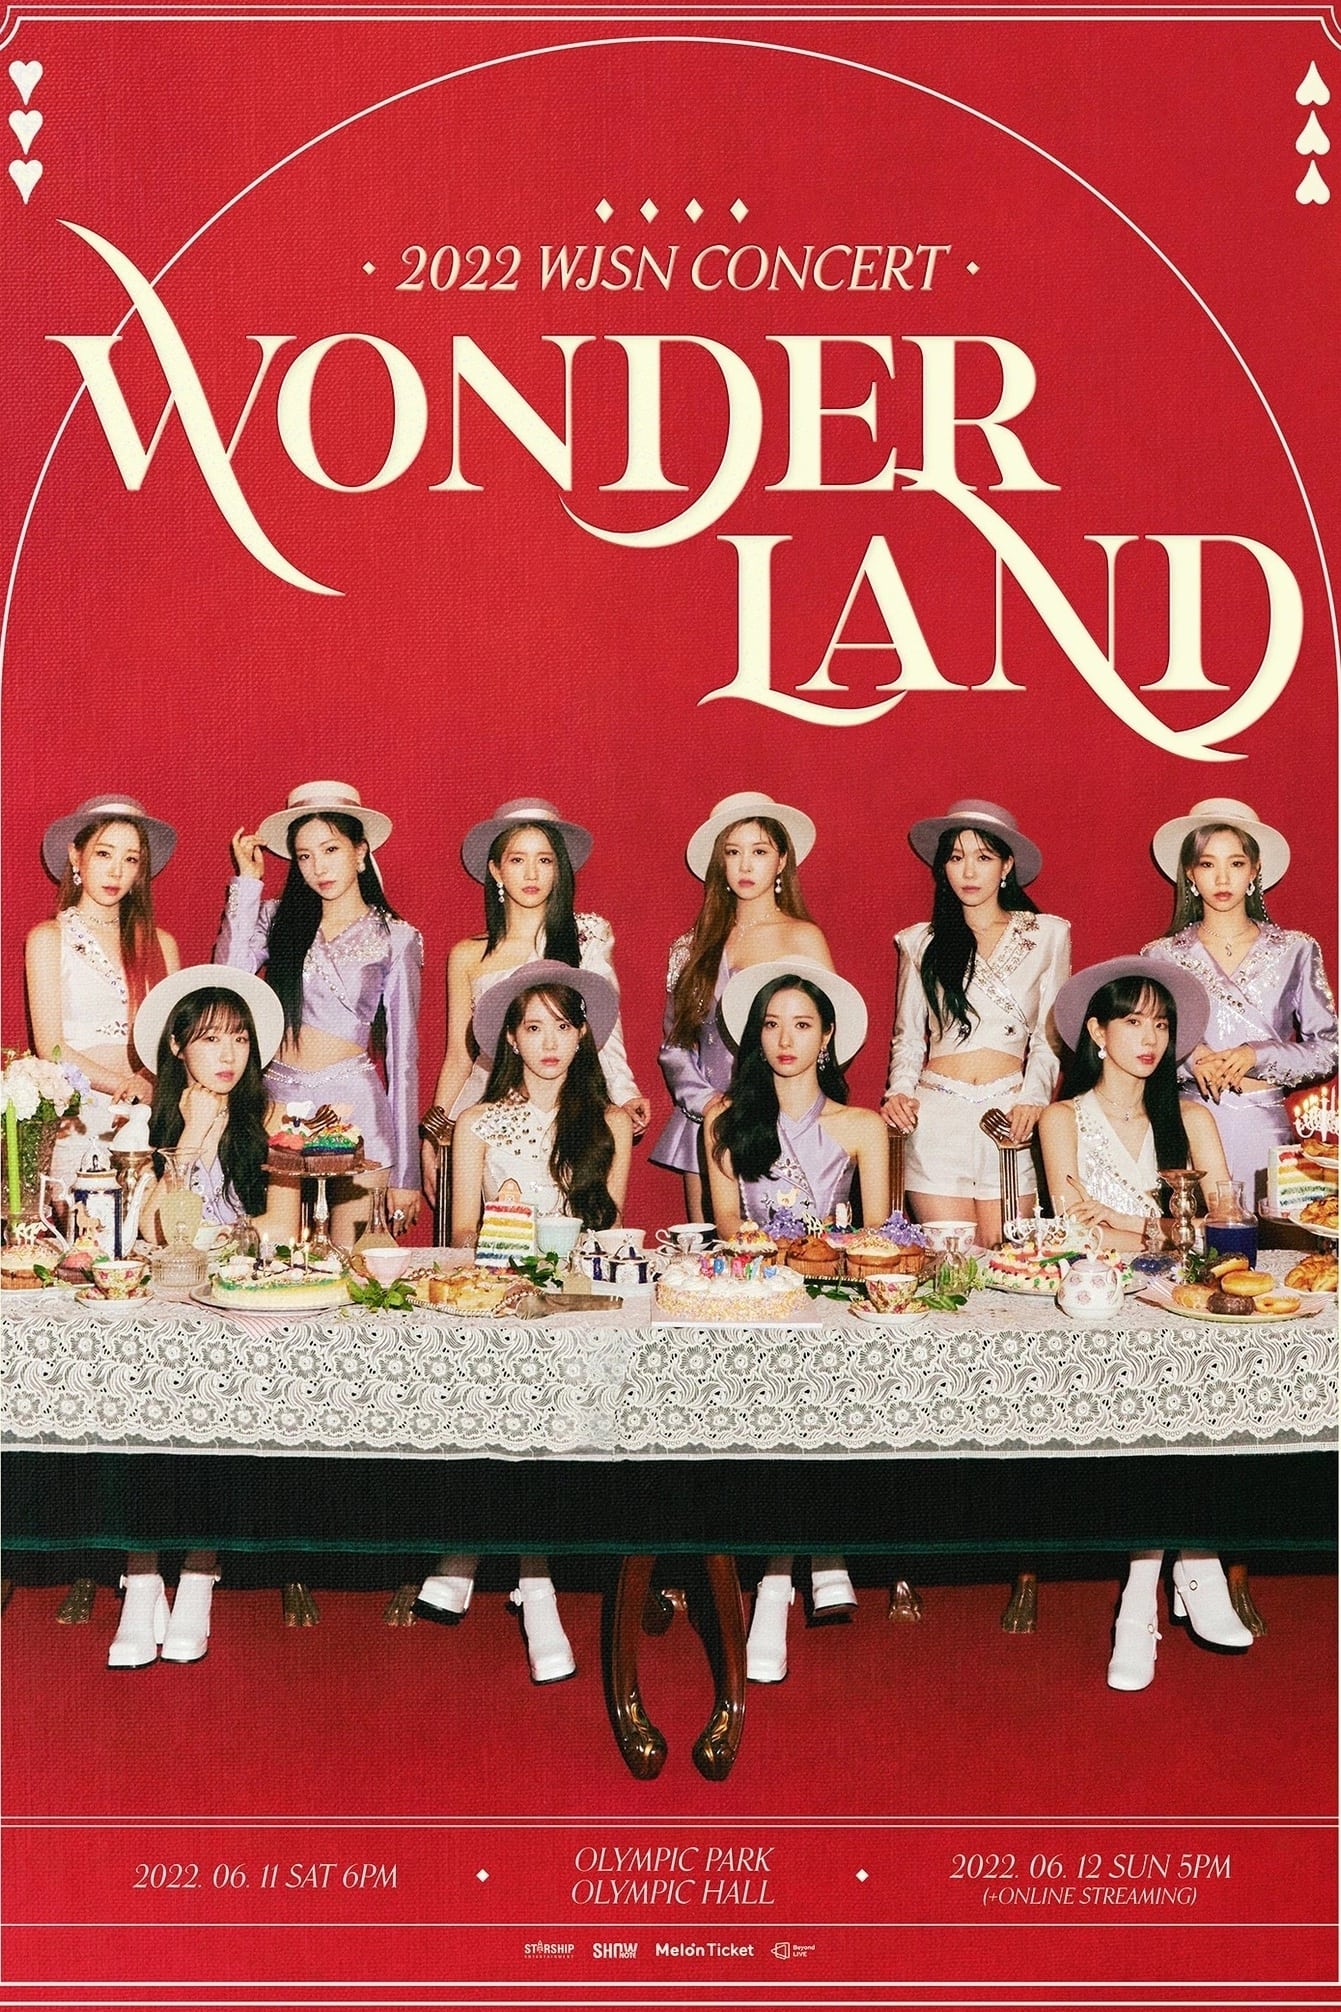 WJSN Concert 2022 "Wonderland"